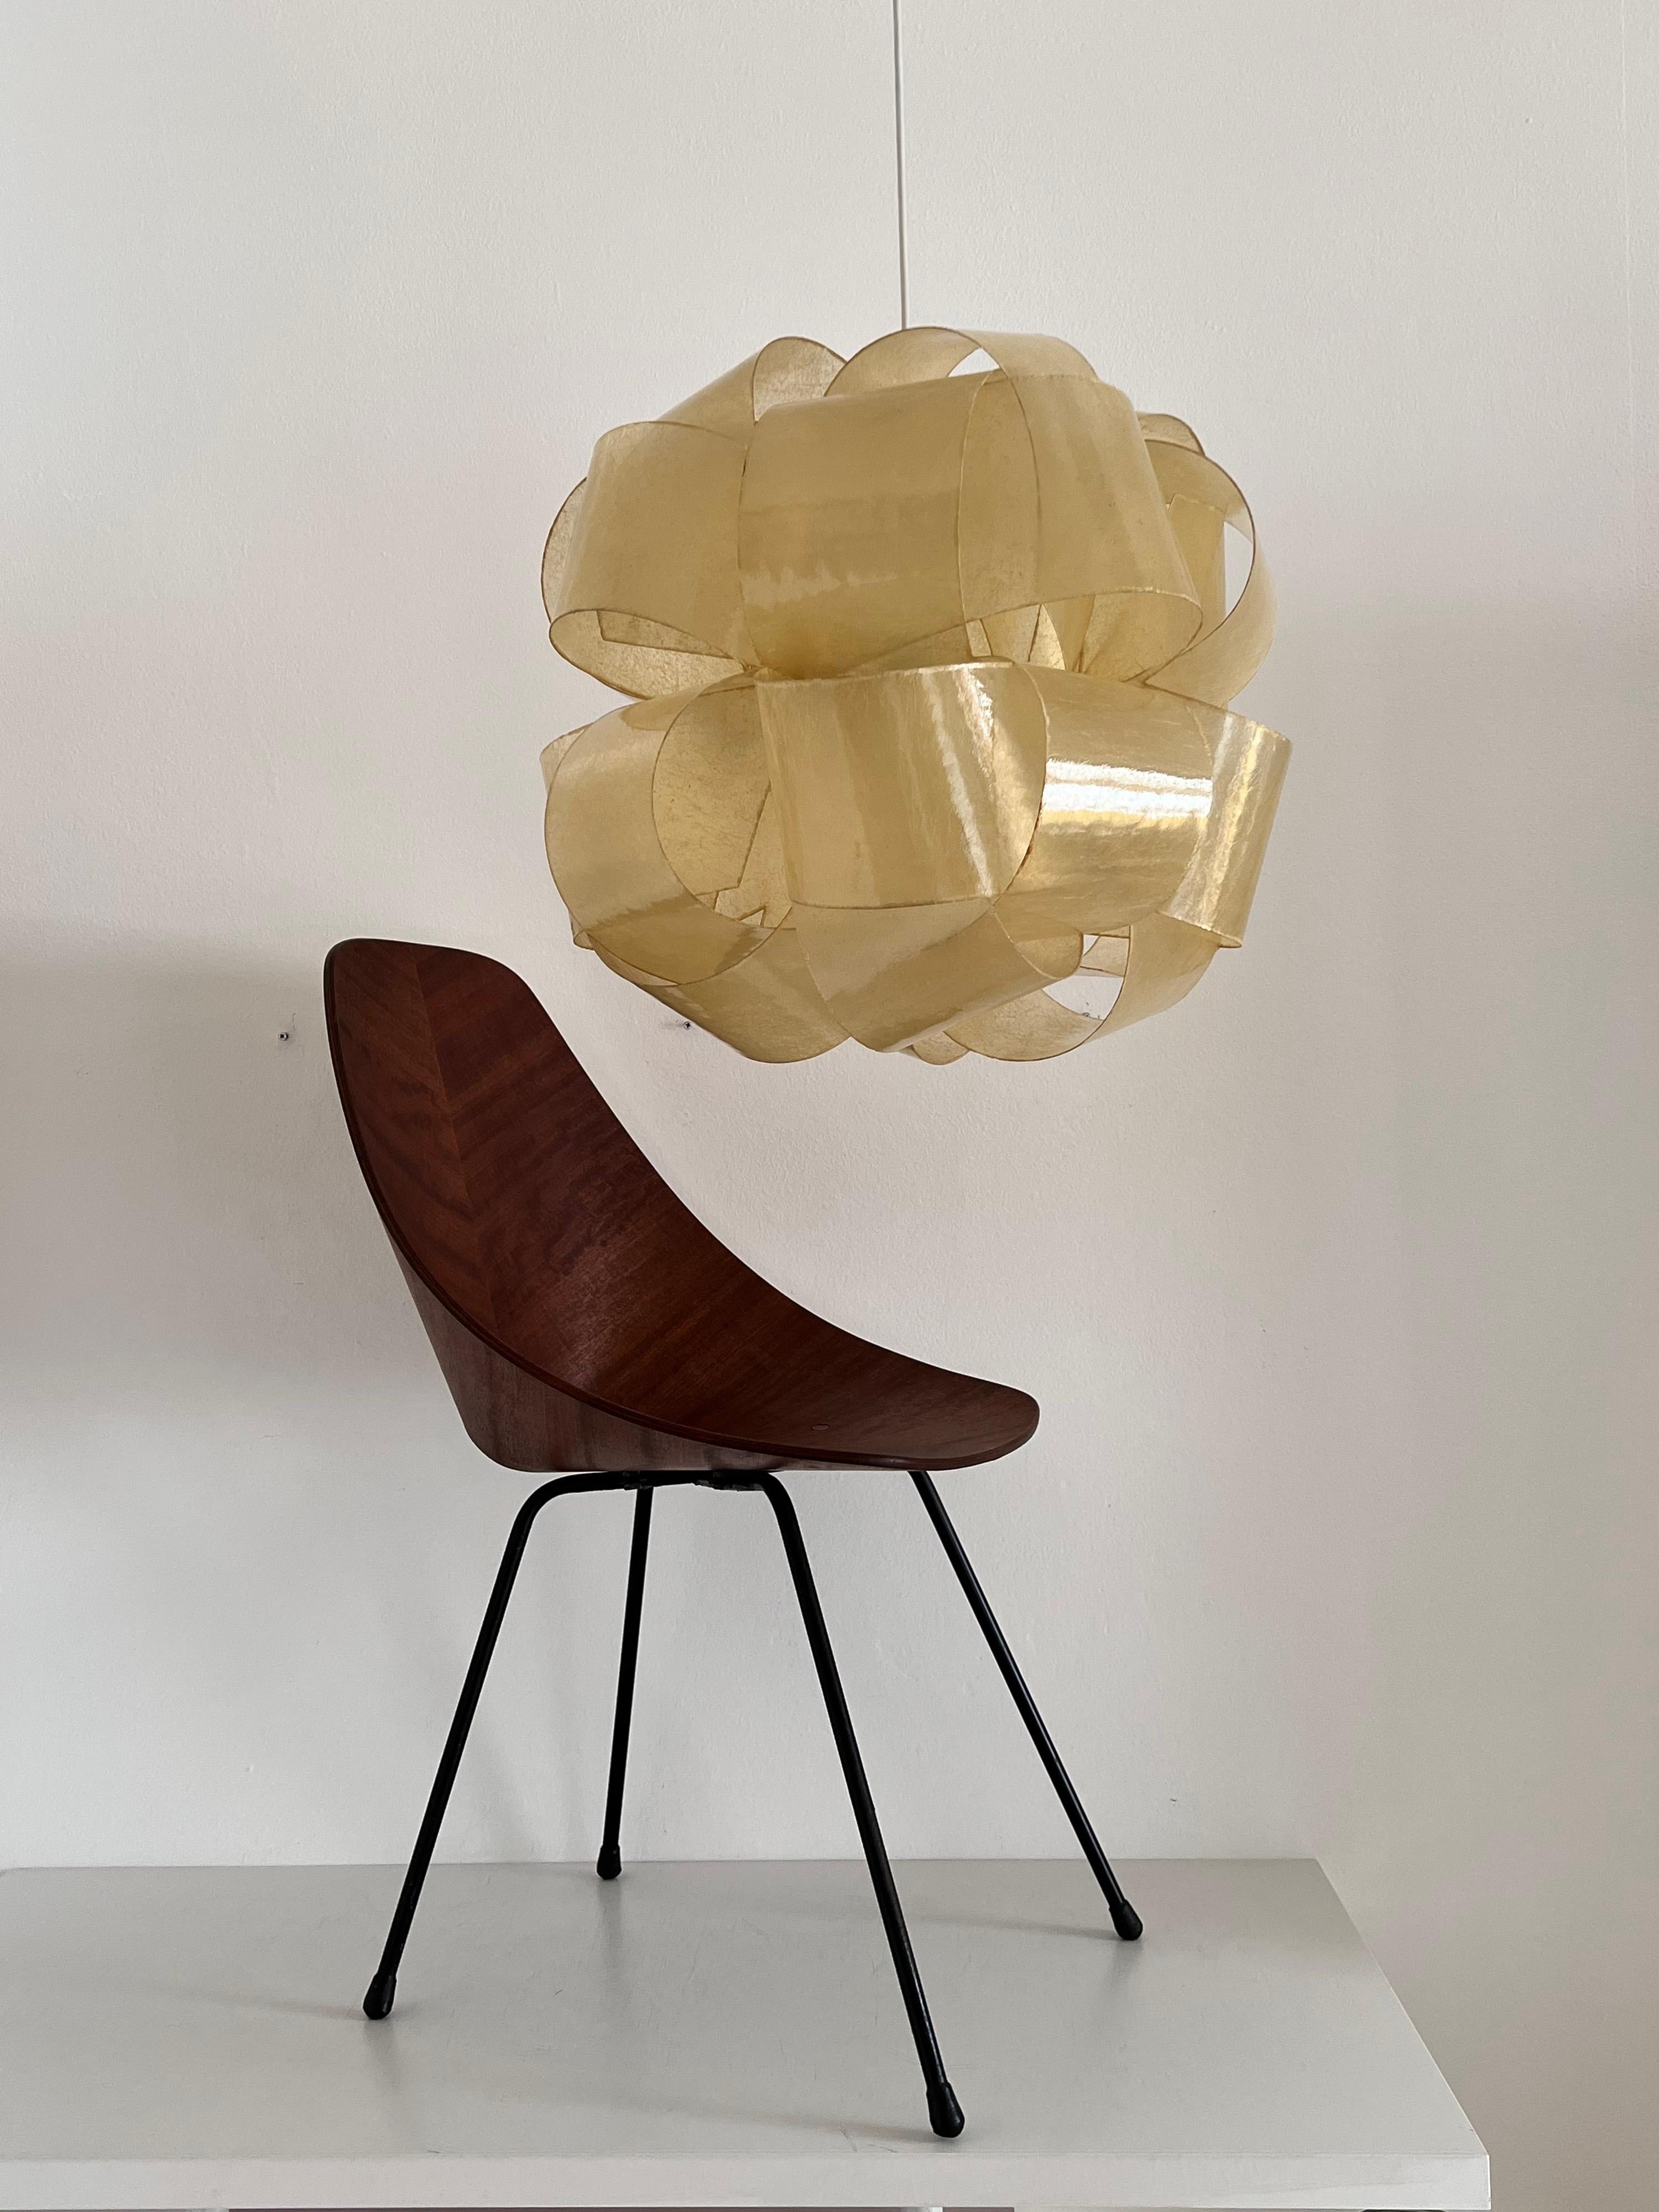 Hand-Crafted Italian Mid-Century Fiberglass Pendant Lamp by Enrico Botta, 1970